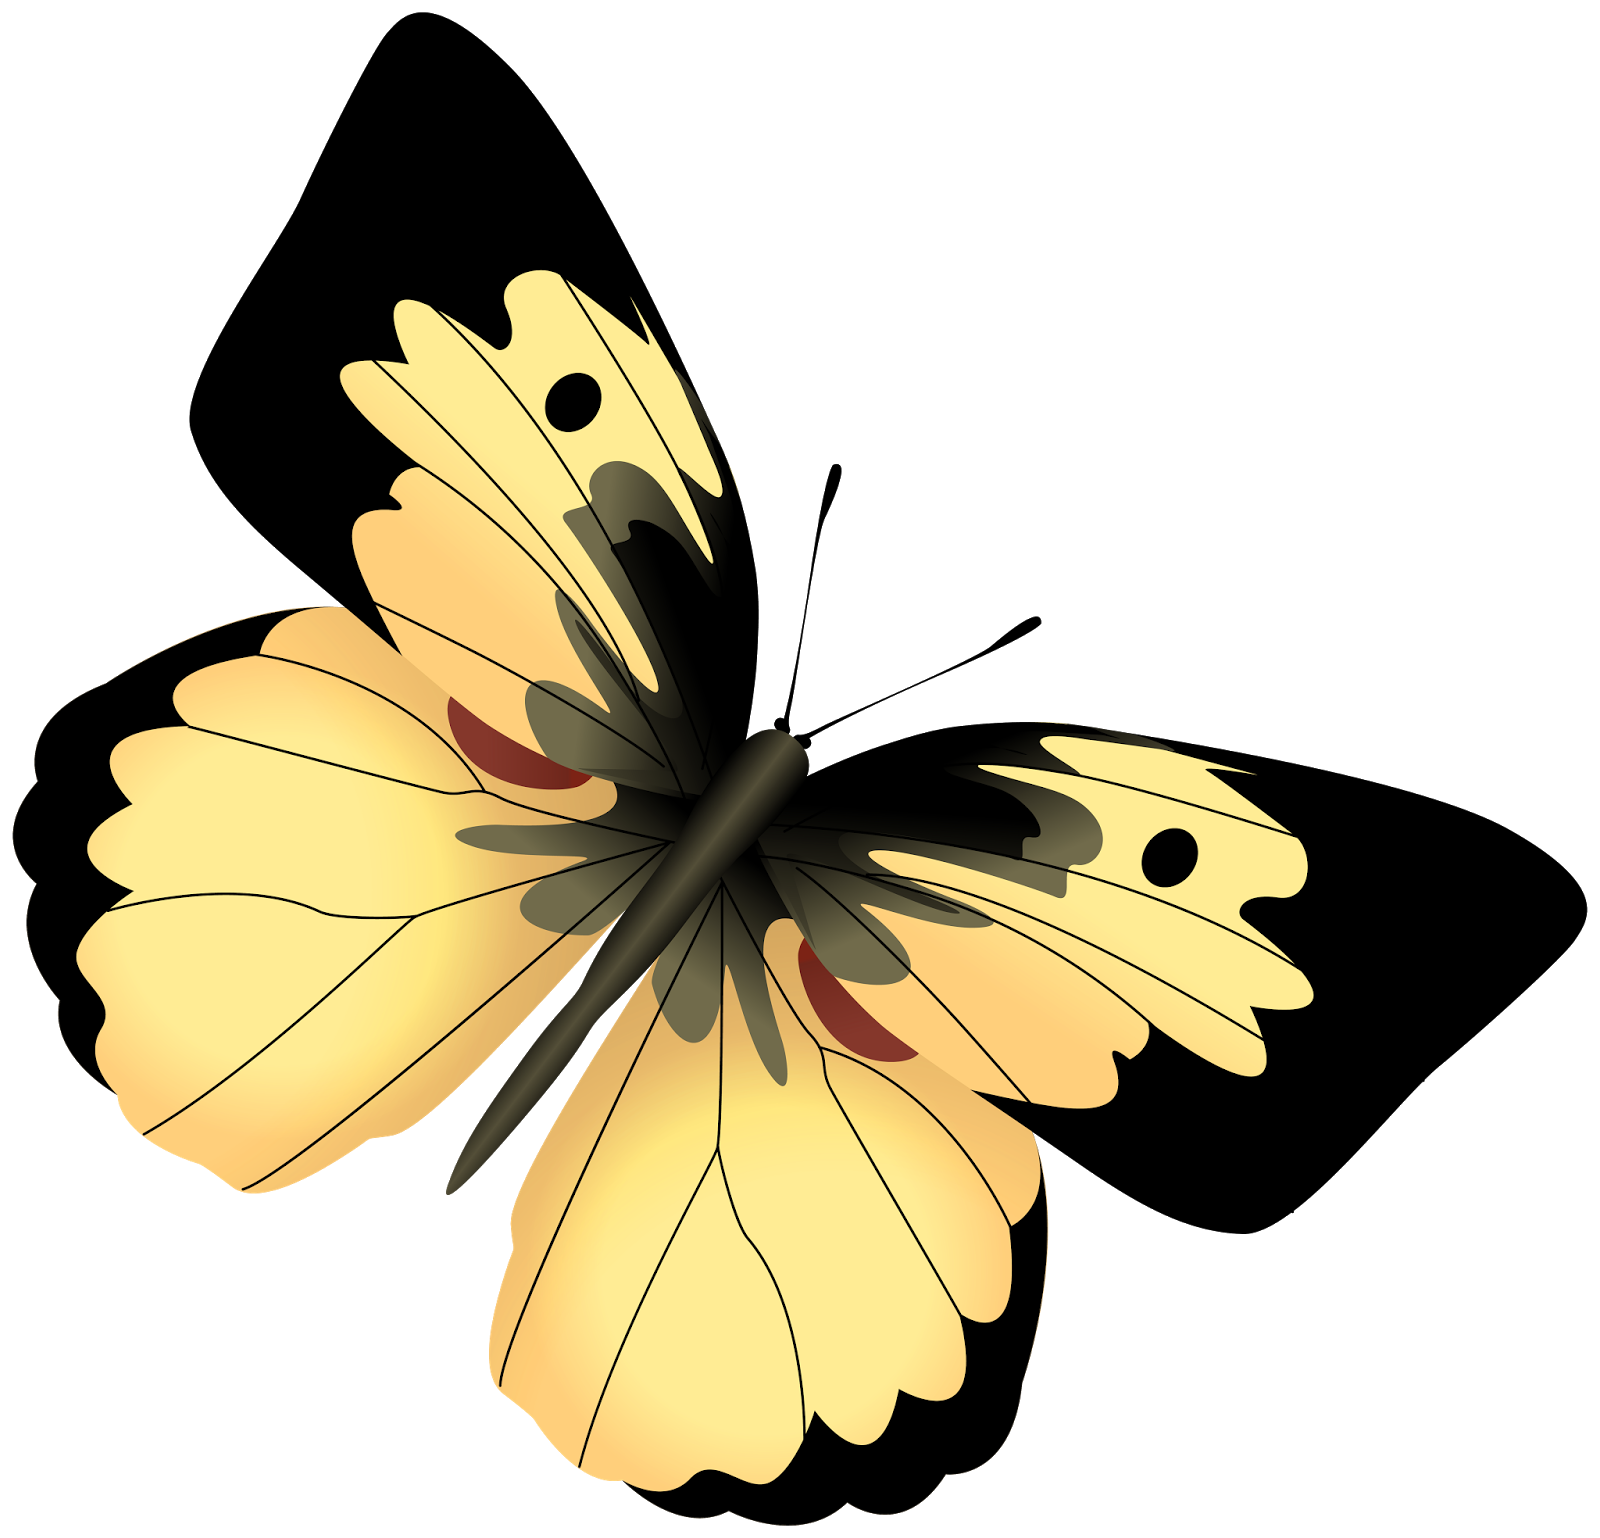 Картинки на прозрачной основе. Бабочки на белом фоне. Бабочки на просроченном фоне. Желтая бабочка на прозрачном фоне. Желтая бабочка на белом фоне.